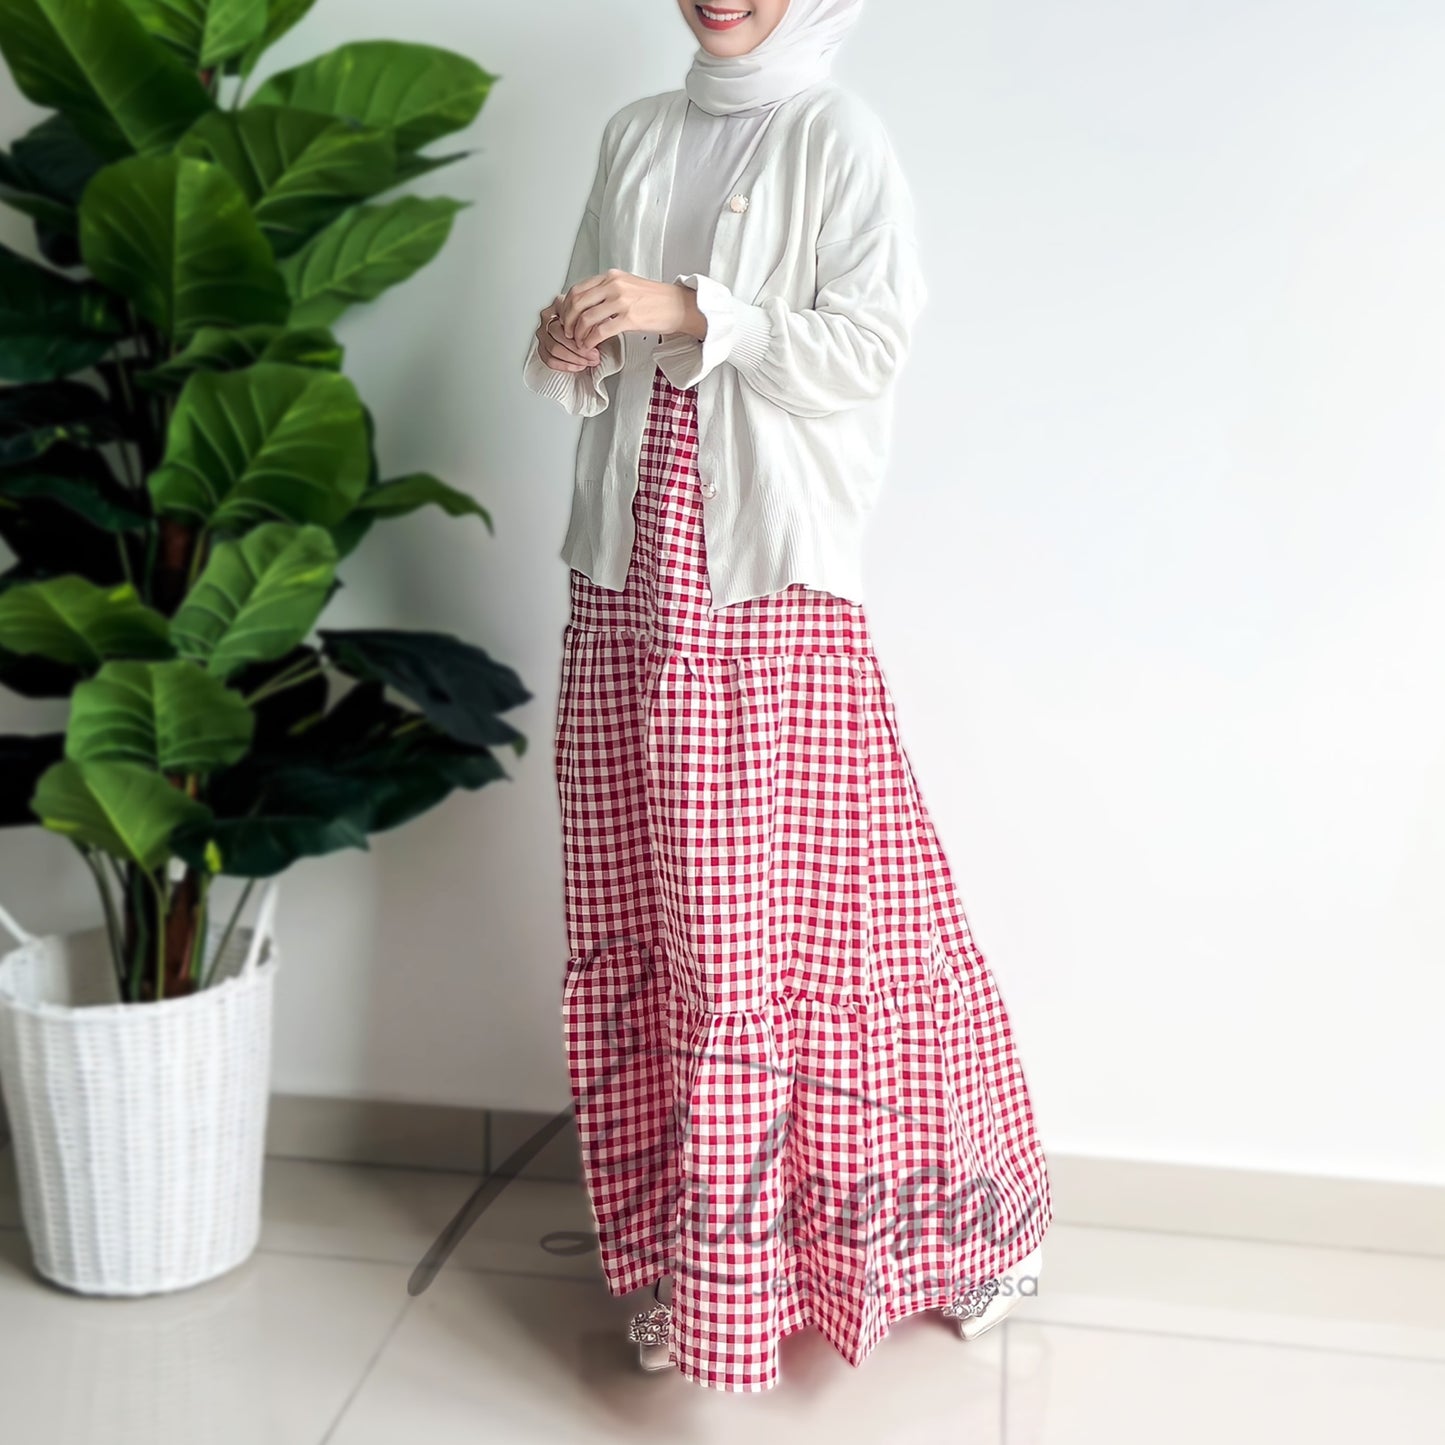 LALEESA PS656606 SKIRT SARITA Fashion High Waist Ruffles Plaid Skirt Muslimah Skirt Labuh Skirt Pencil Skirt Kembang